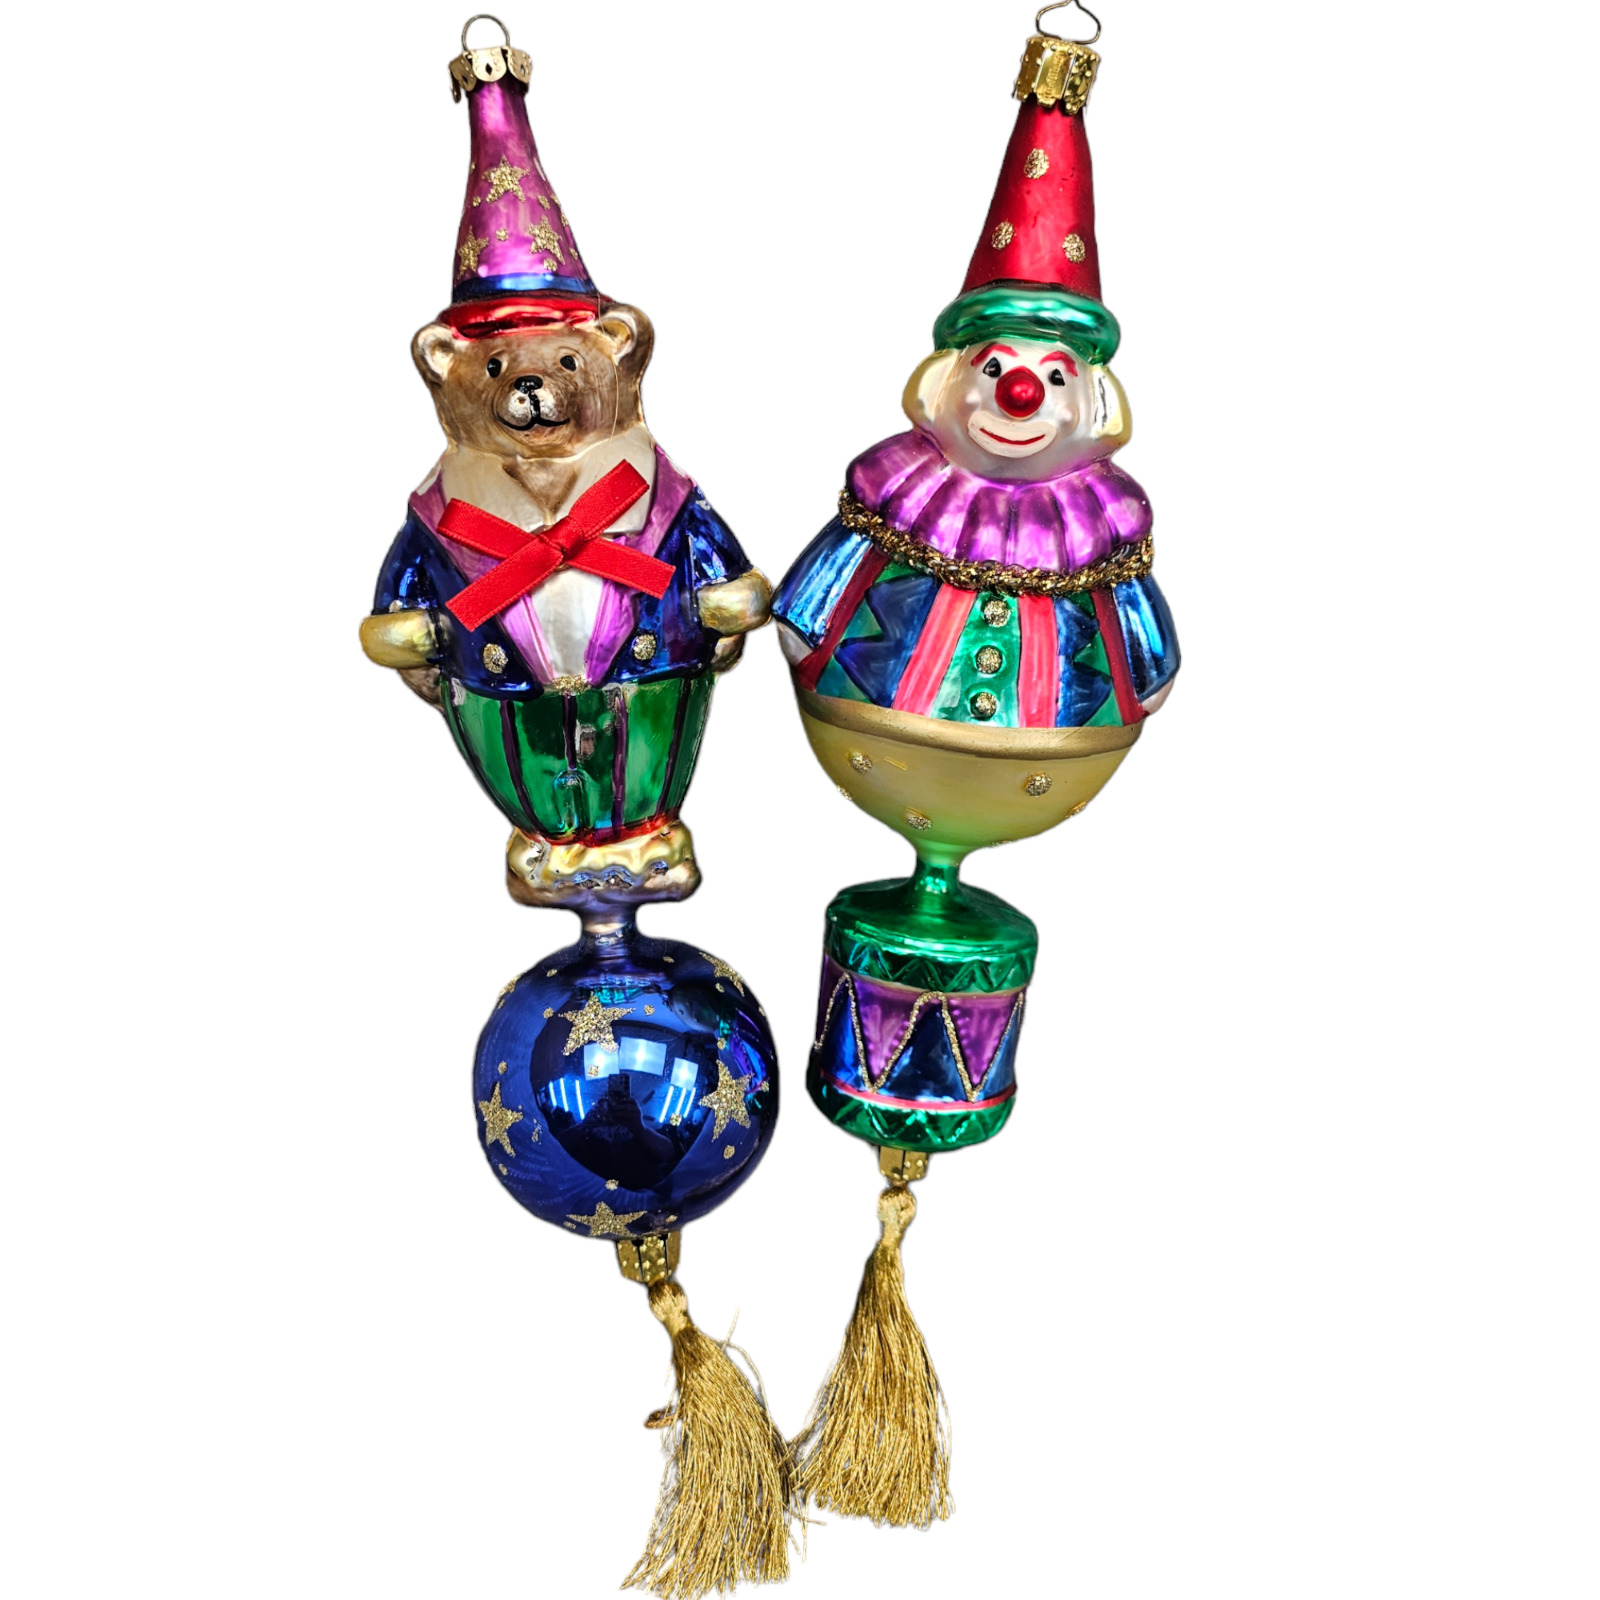 VTG Christborn Blown Glass Ornament 2 PC Circus Clown & Bear Large Set Glitter